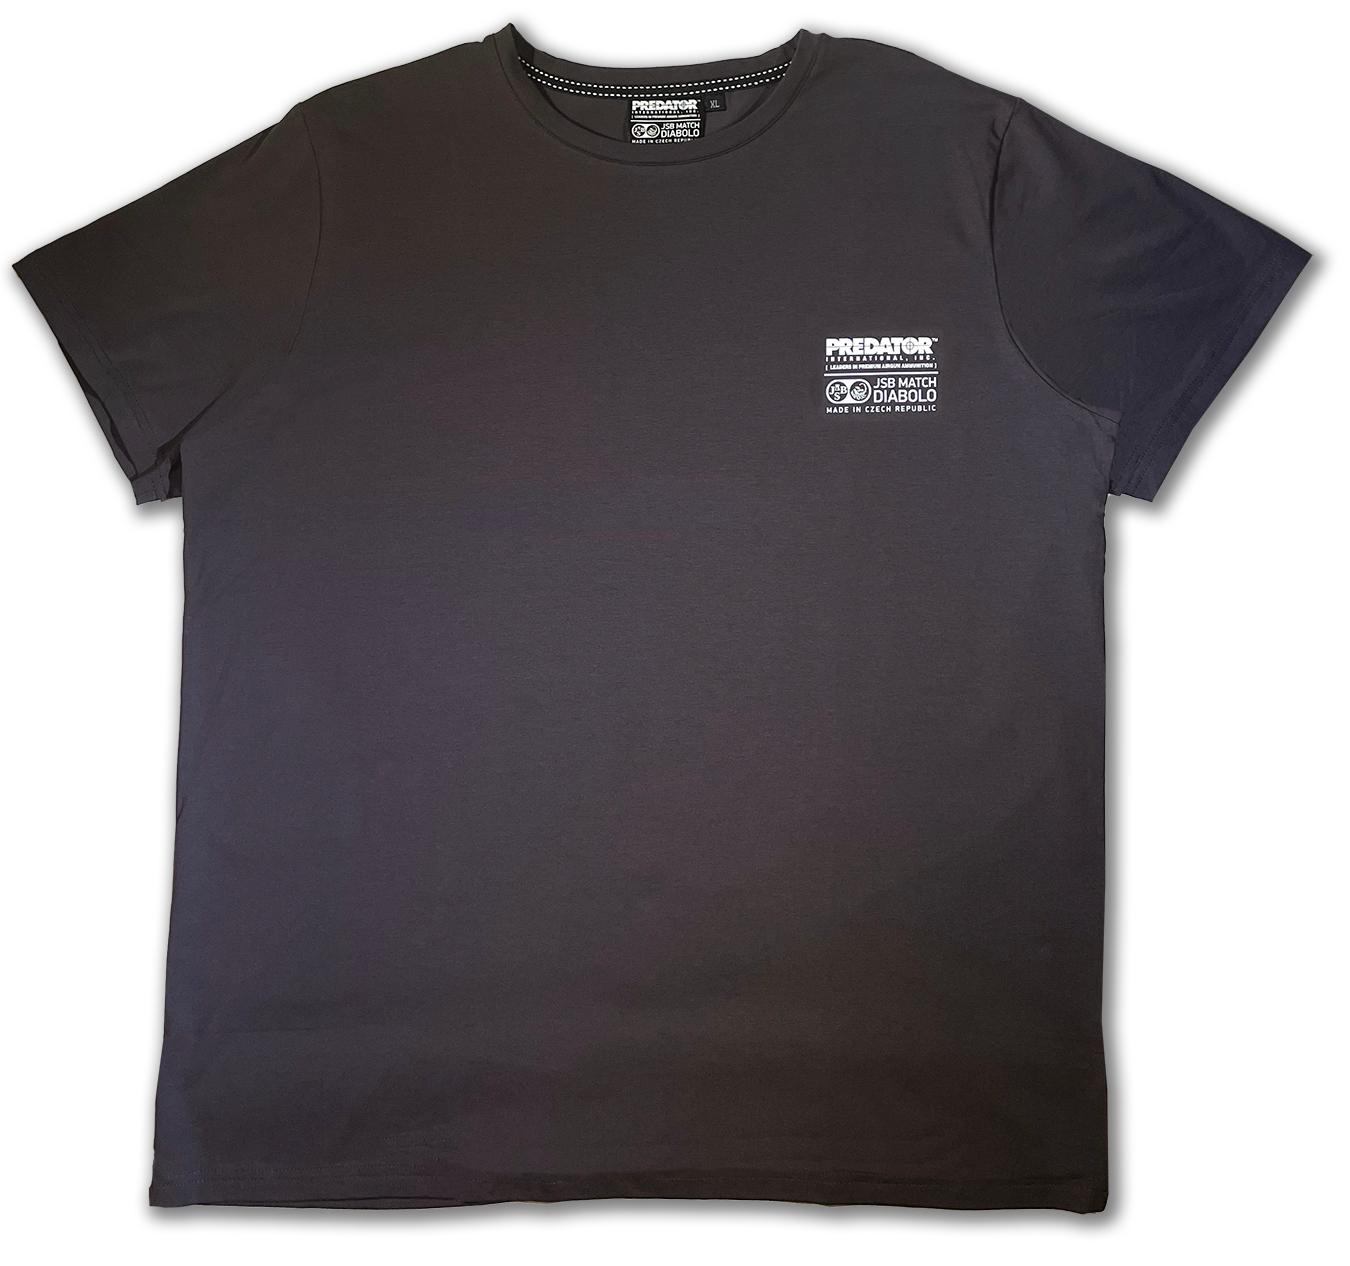 Predator Cotton/Spandex Short Sleeve T-Shirt